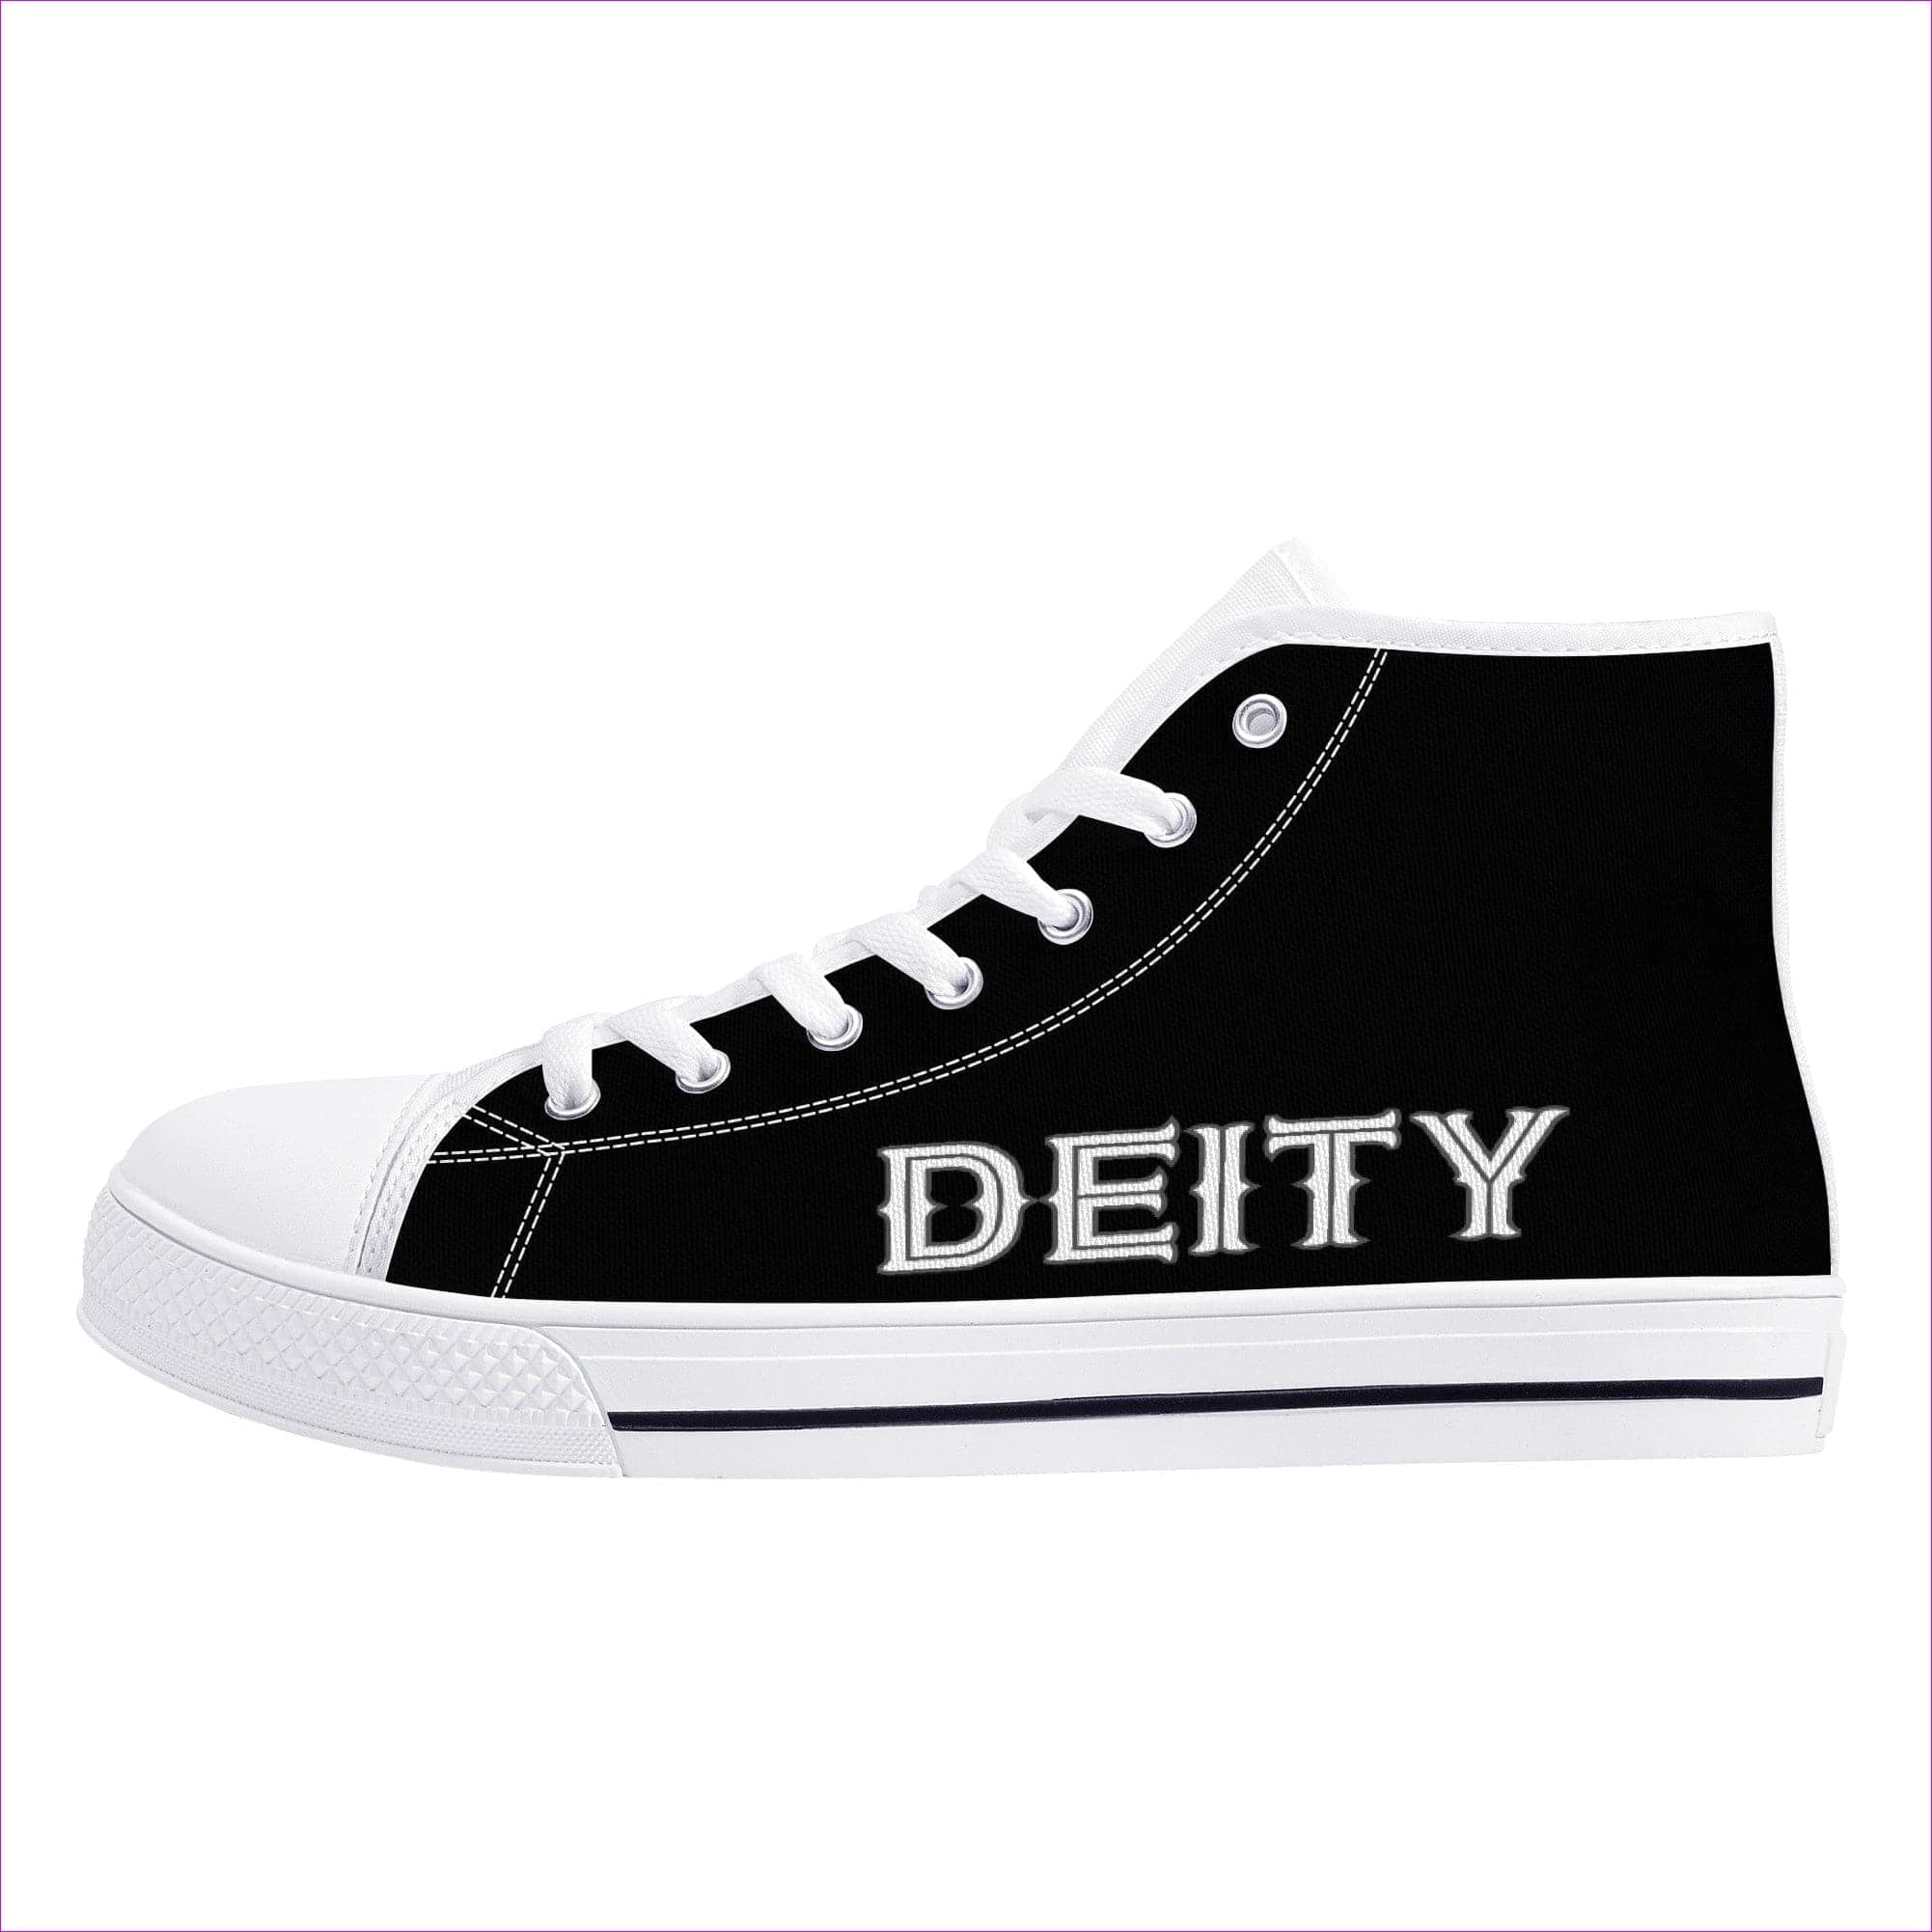 Deity Black High-Top Canvas Shoes - canvas shoes at TFC&H Co.